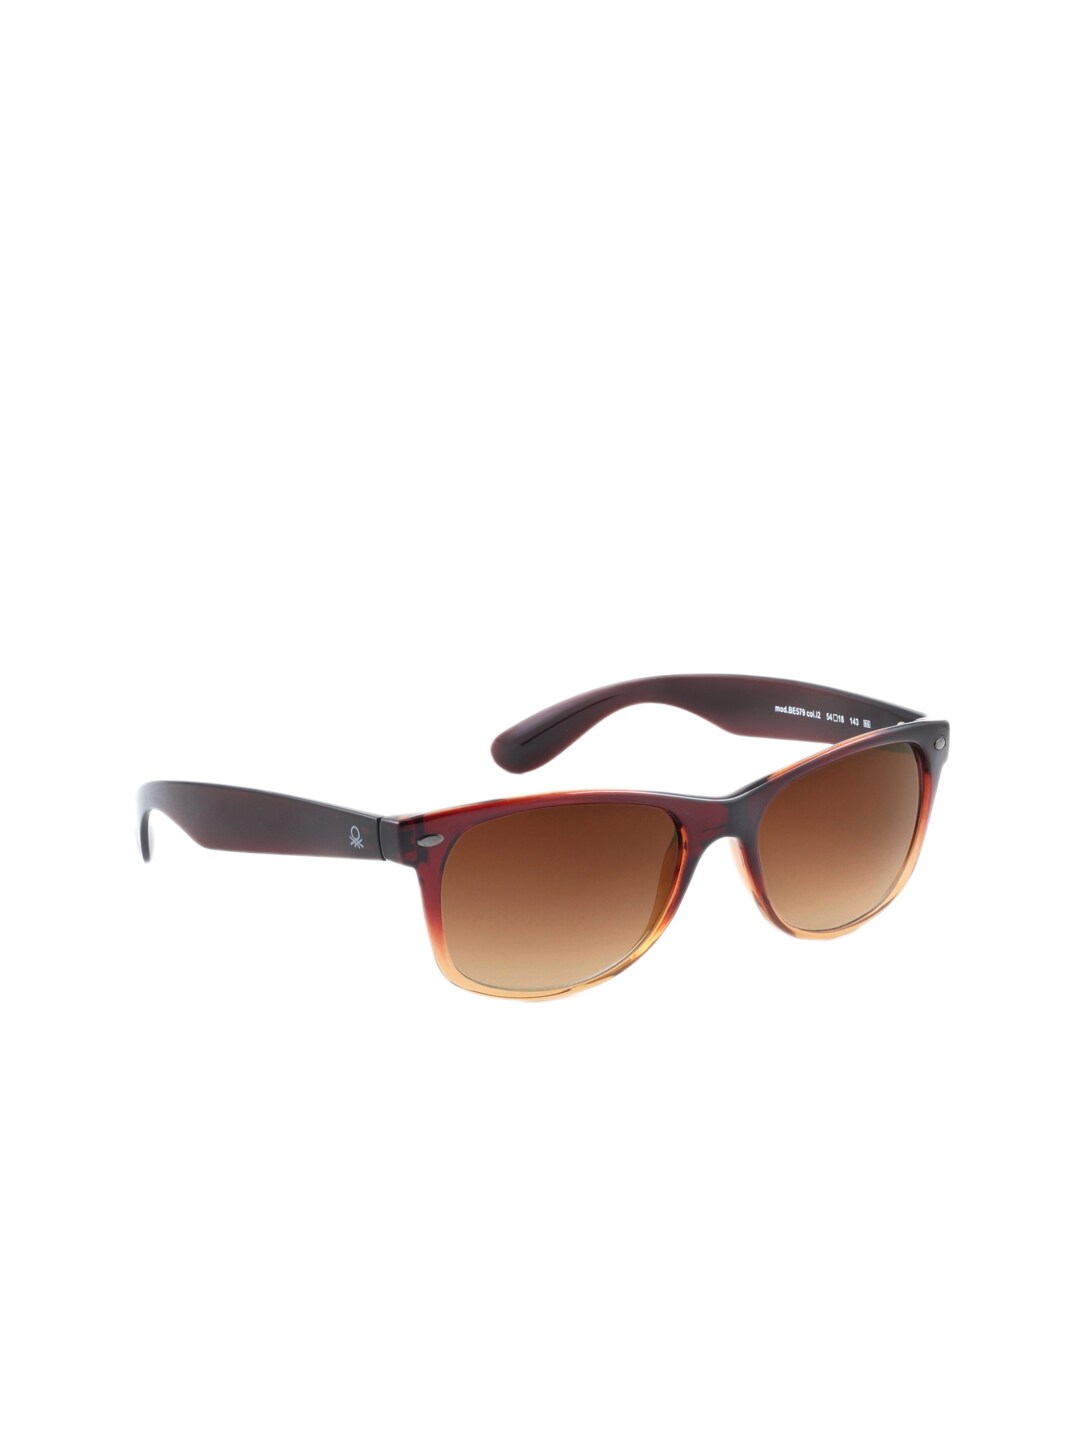 United Colors of Benetton Unisex Brown Sunglasses